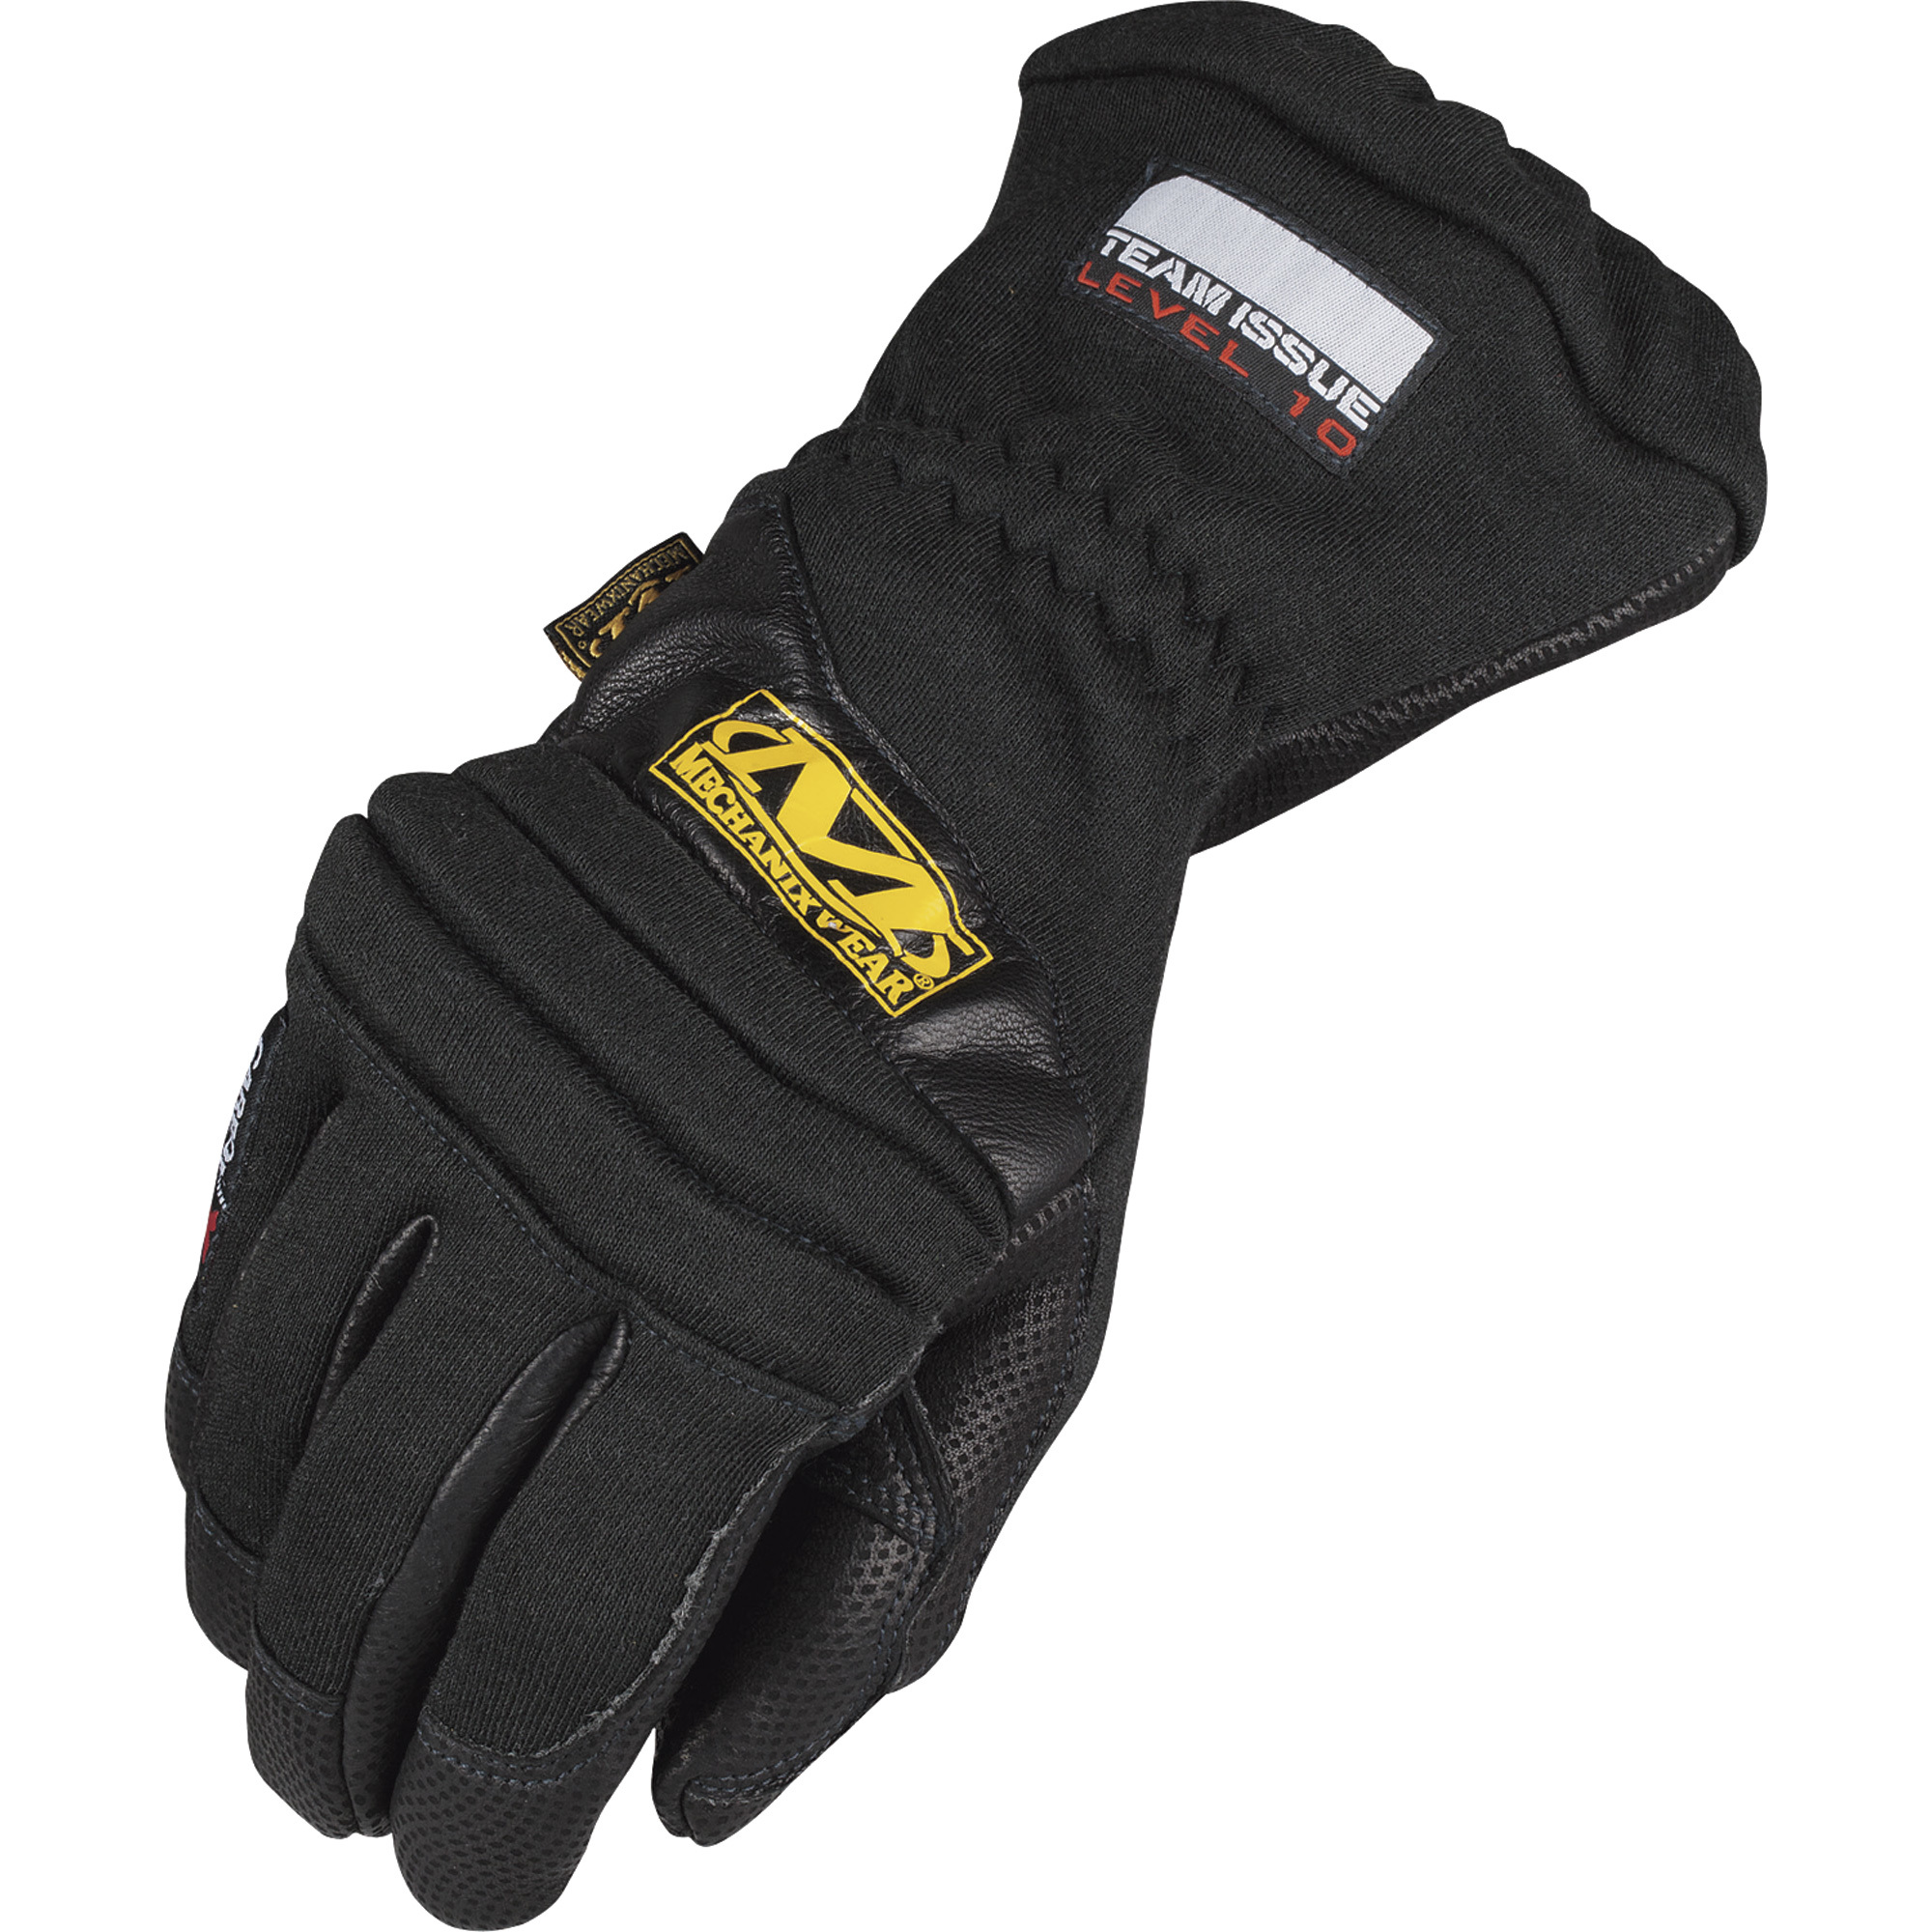 Mechanix Men's Wear Carbon-X Level 10 Glove - Black, XL, Model CXG-L10